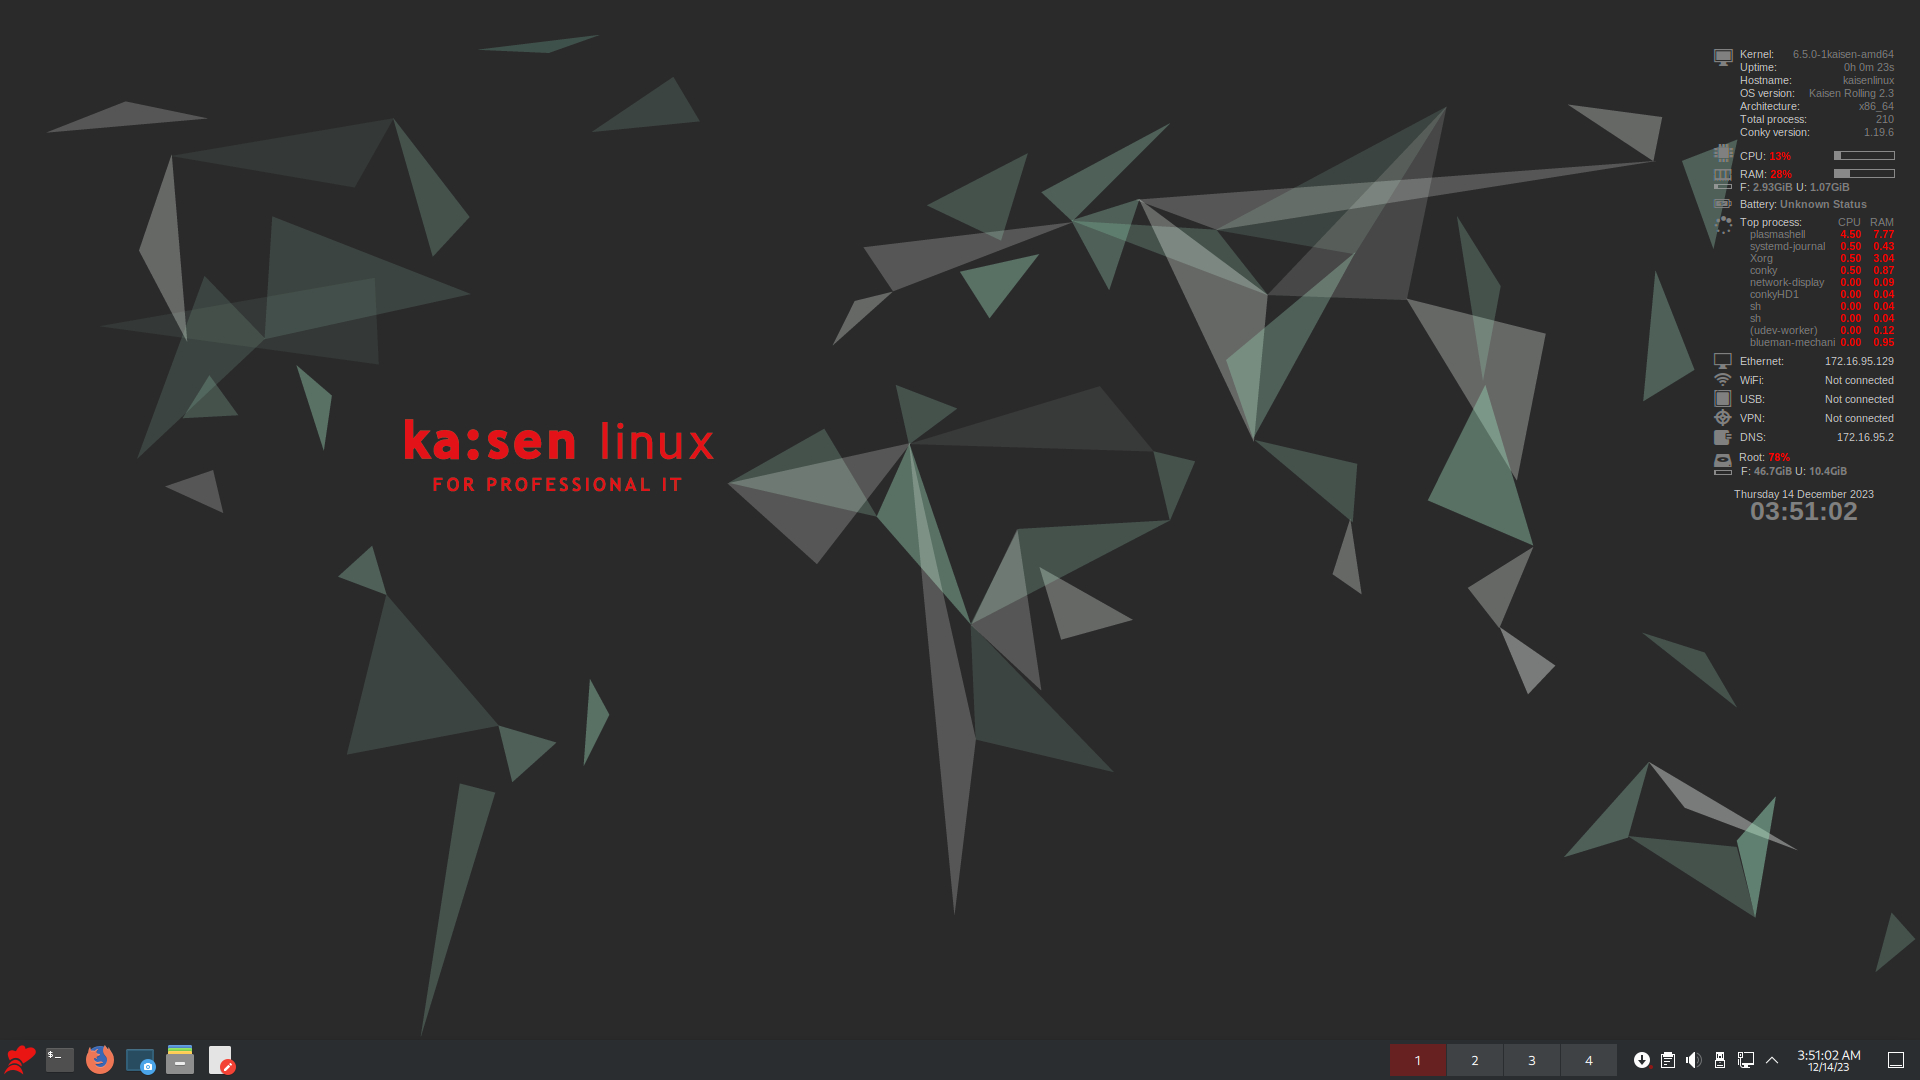 kaisen linux KDE with kaisen-conky